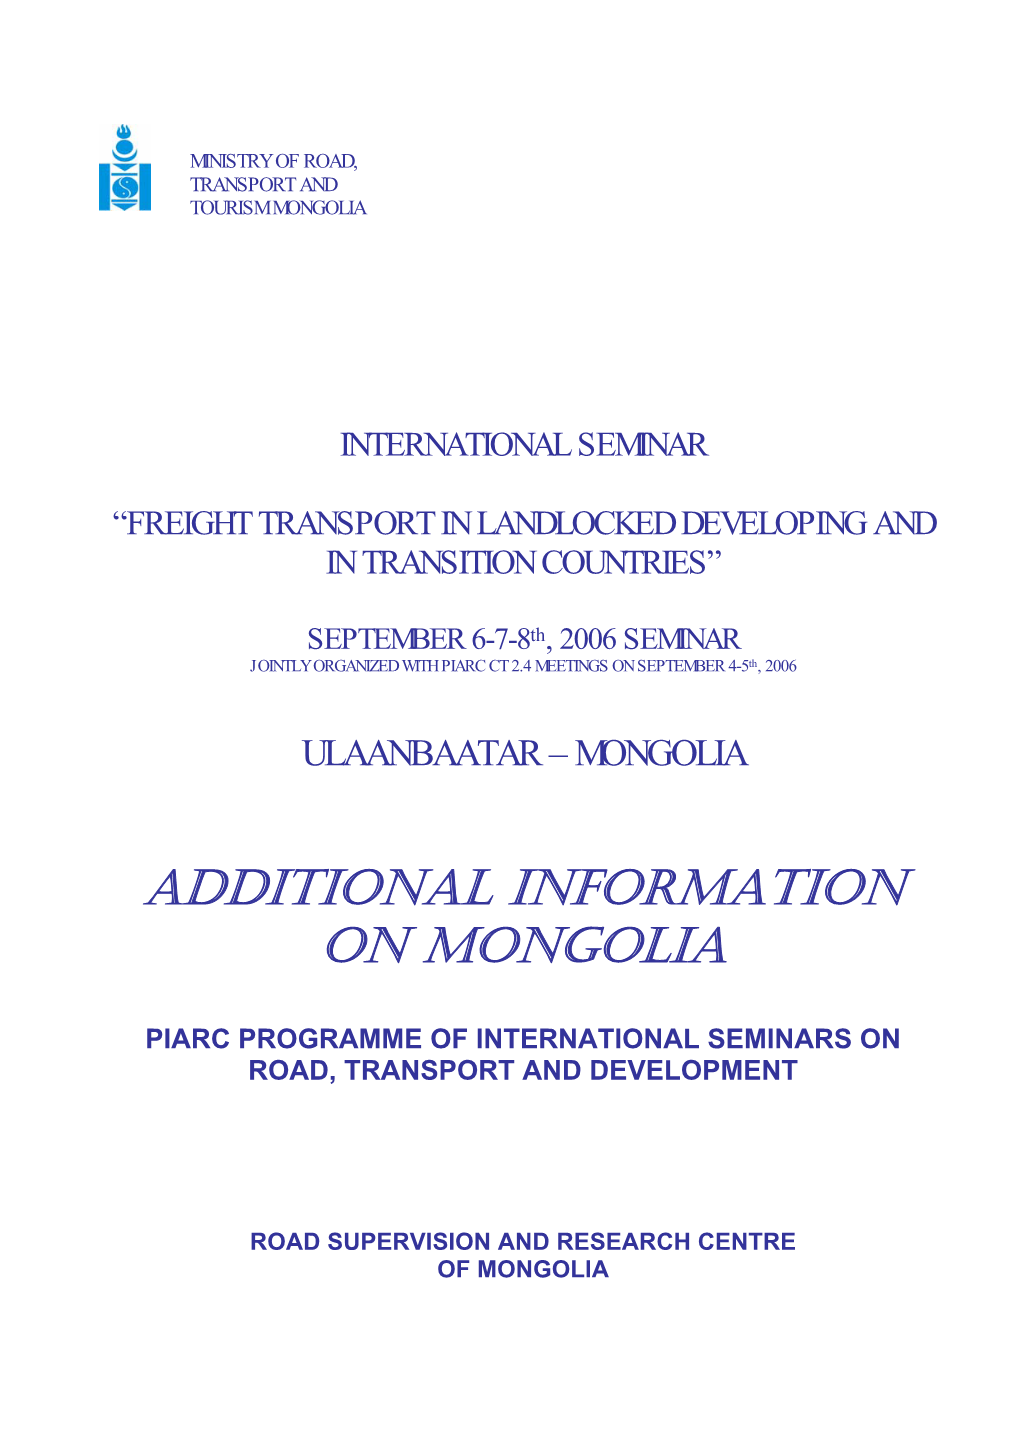 Additional Information on Mongolia